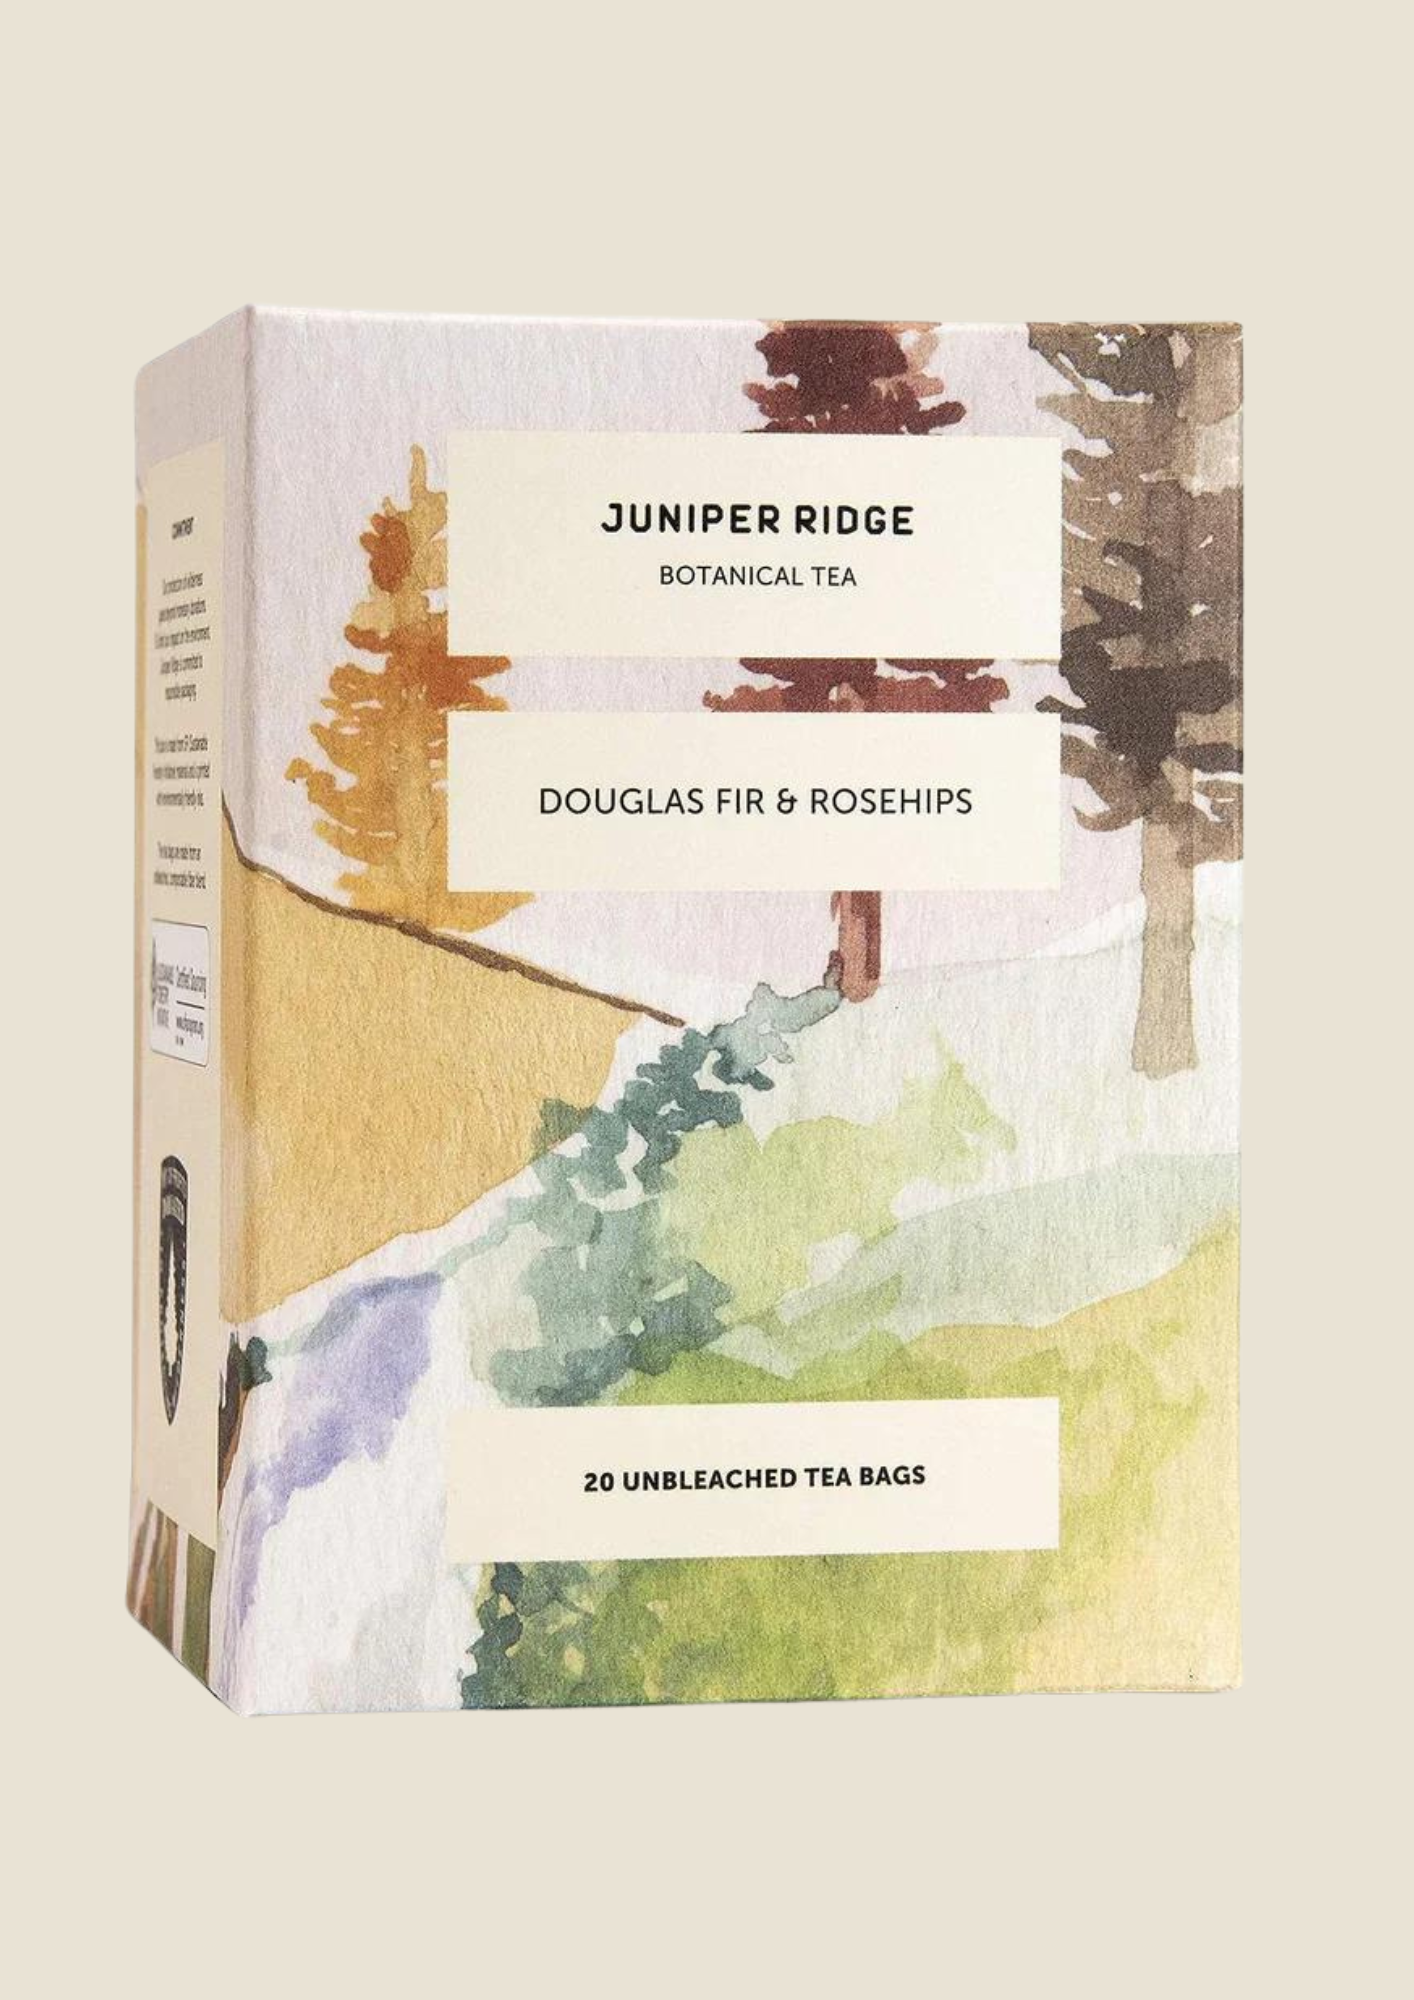 Douglas Fir & Rosehips Botanical Tea